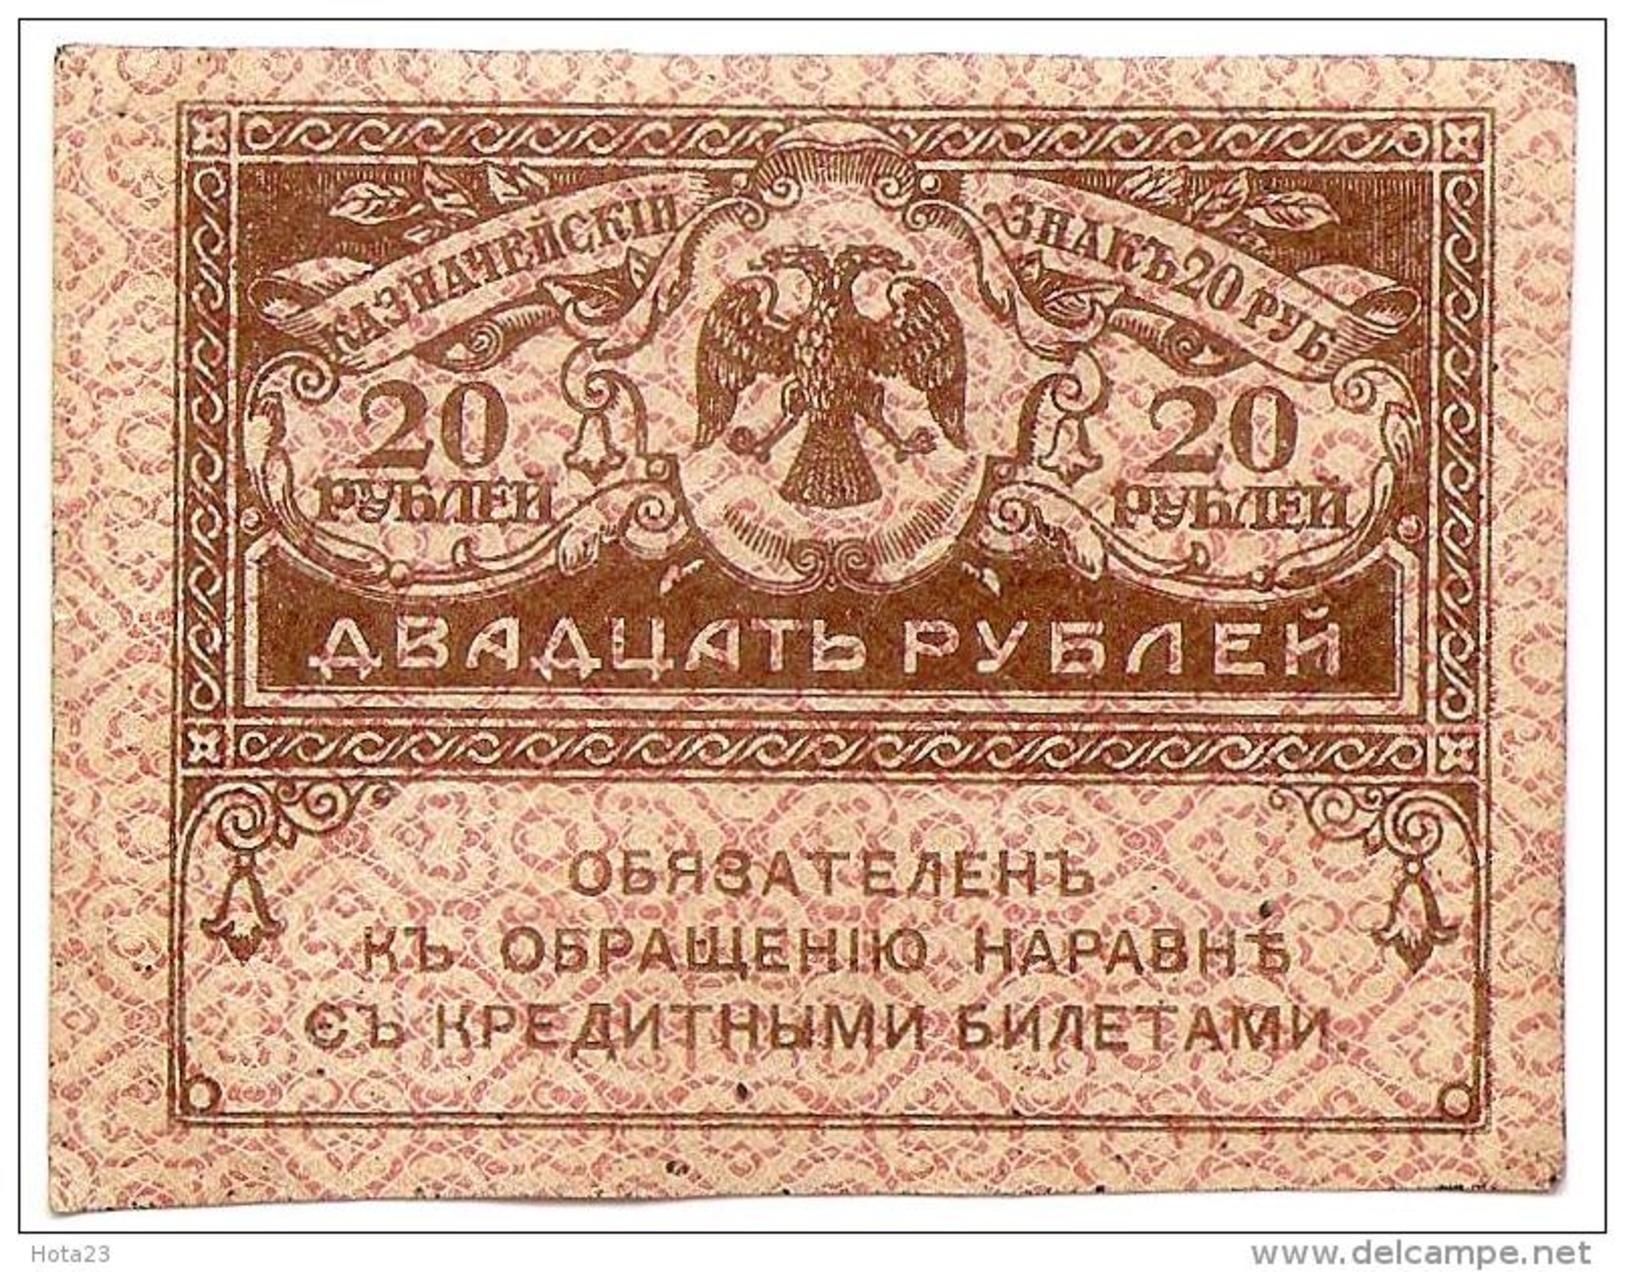 RUSSIA BILLET RUSSIE - P.38 - 1917 - 20 ROUBLES BANKNOTE - Russie